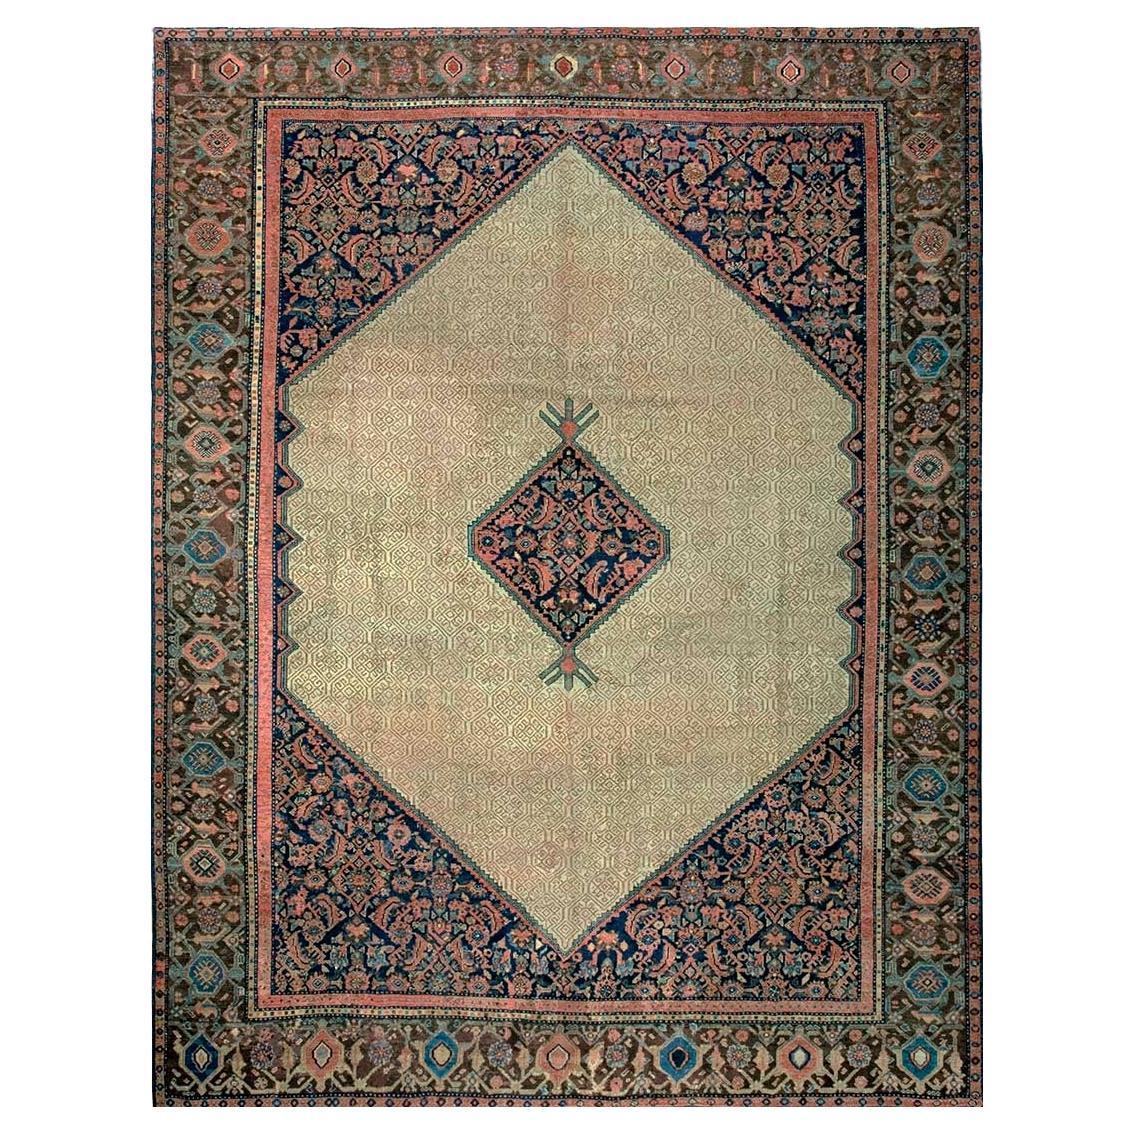 Early 20th Century Persian Malayer Carpet ( 9'3" x 12'6" - 282 x 382 )